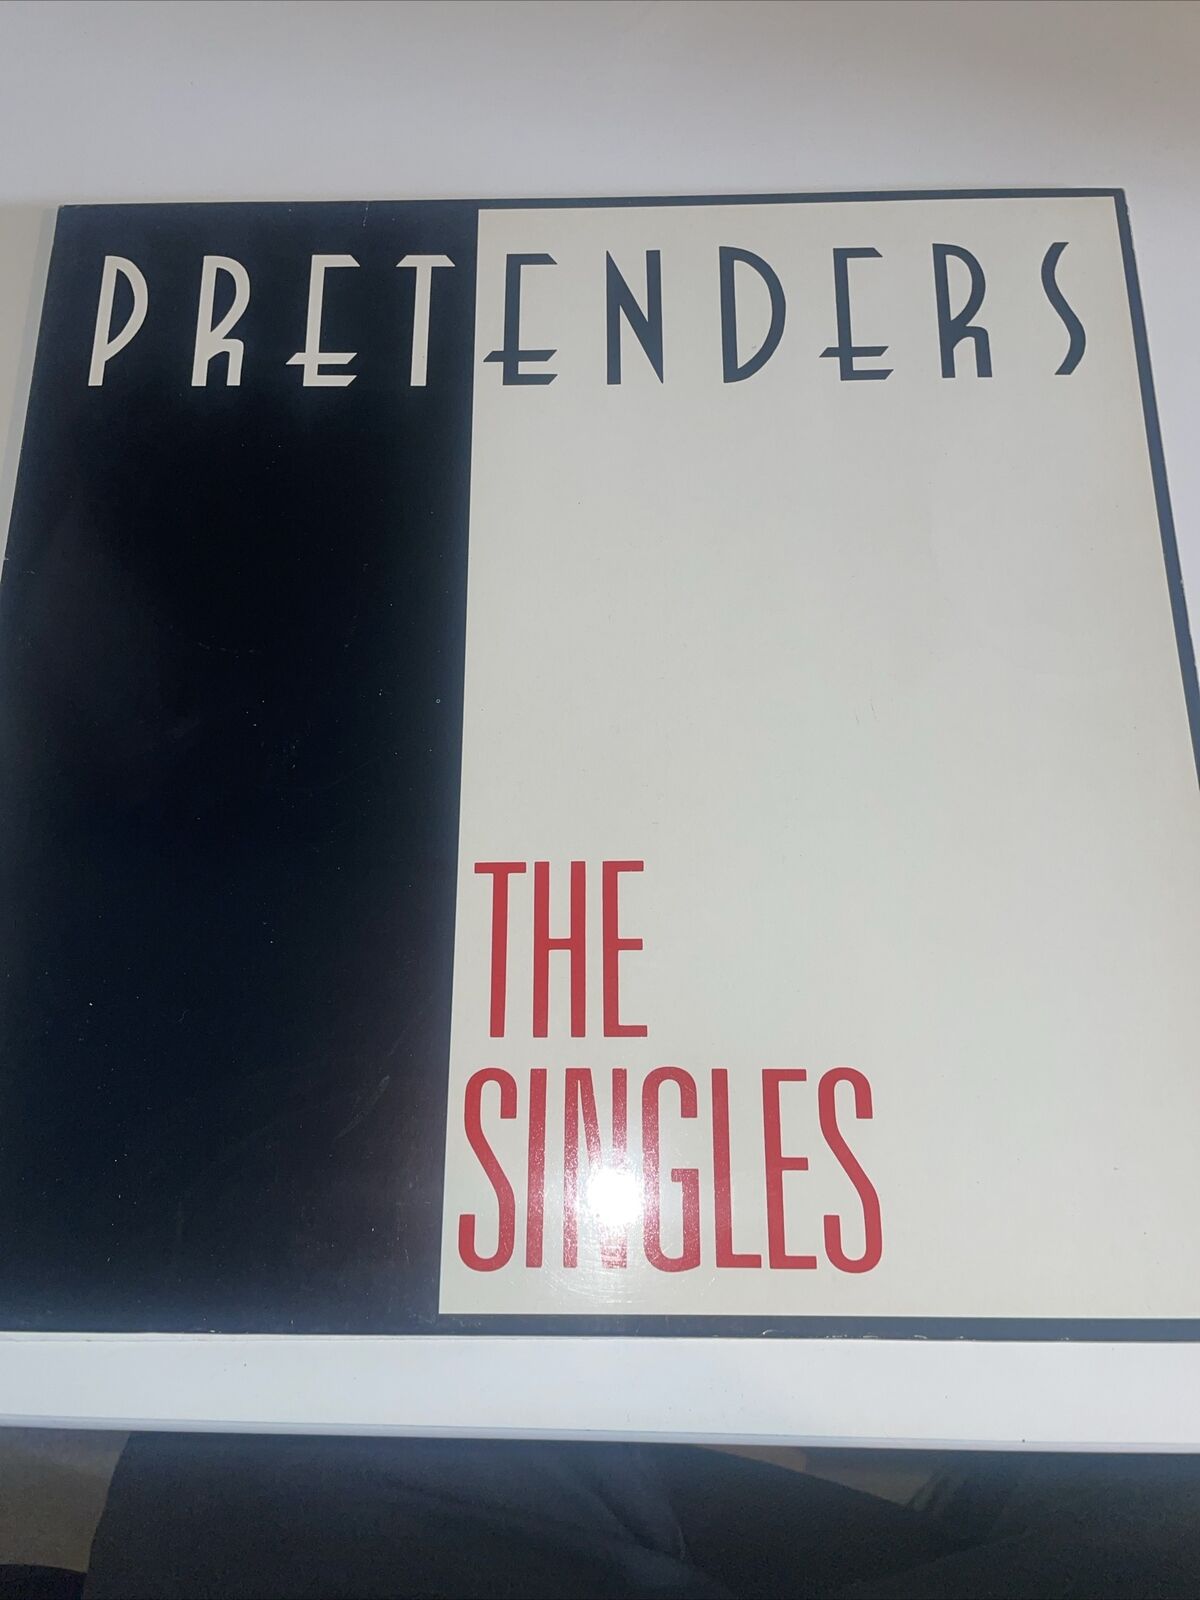 THE PRETENDERS THE SINGLES VINYL ALBUM RECORD LP 33rpm +POSTER  All Ex To Nr Mt